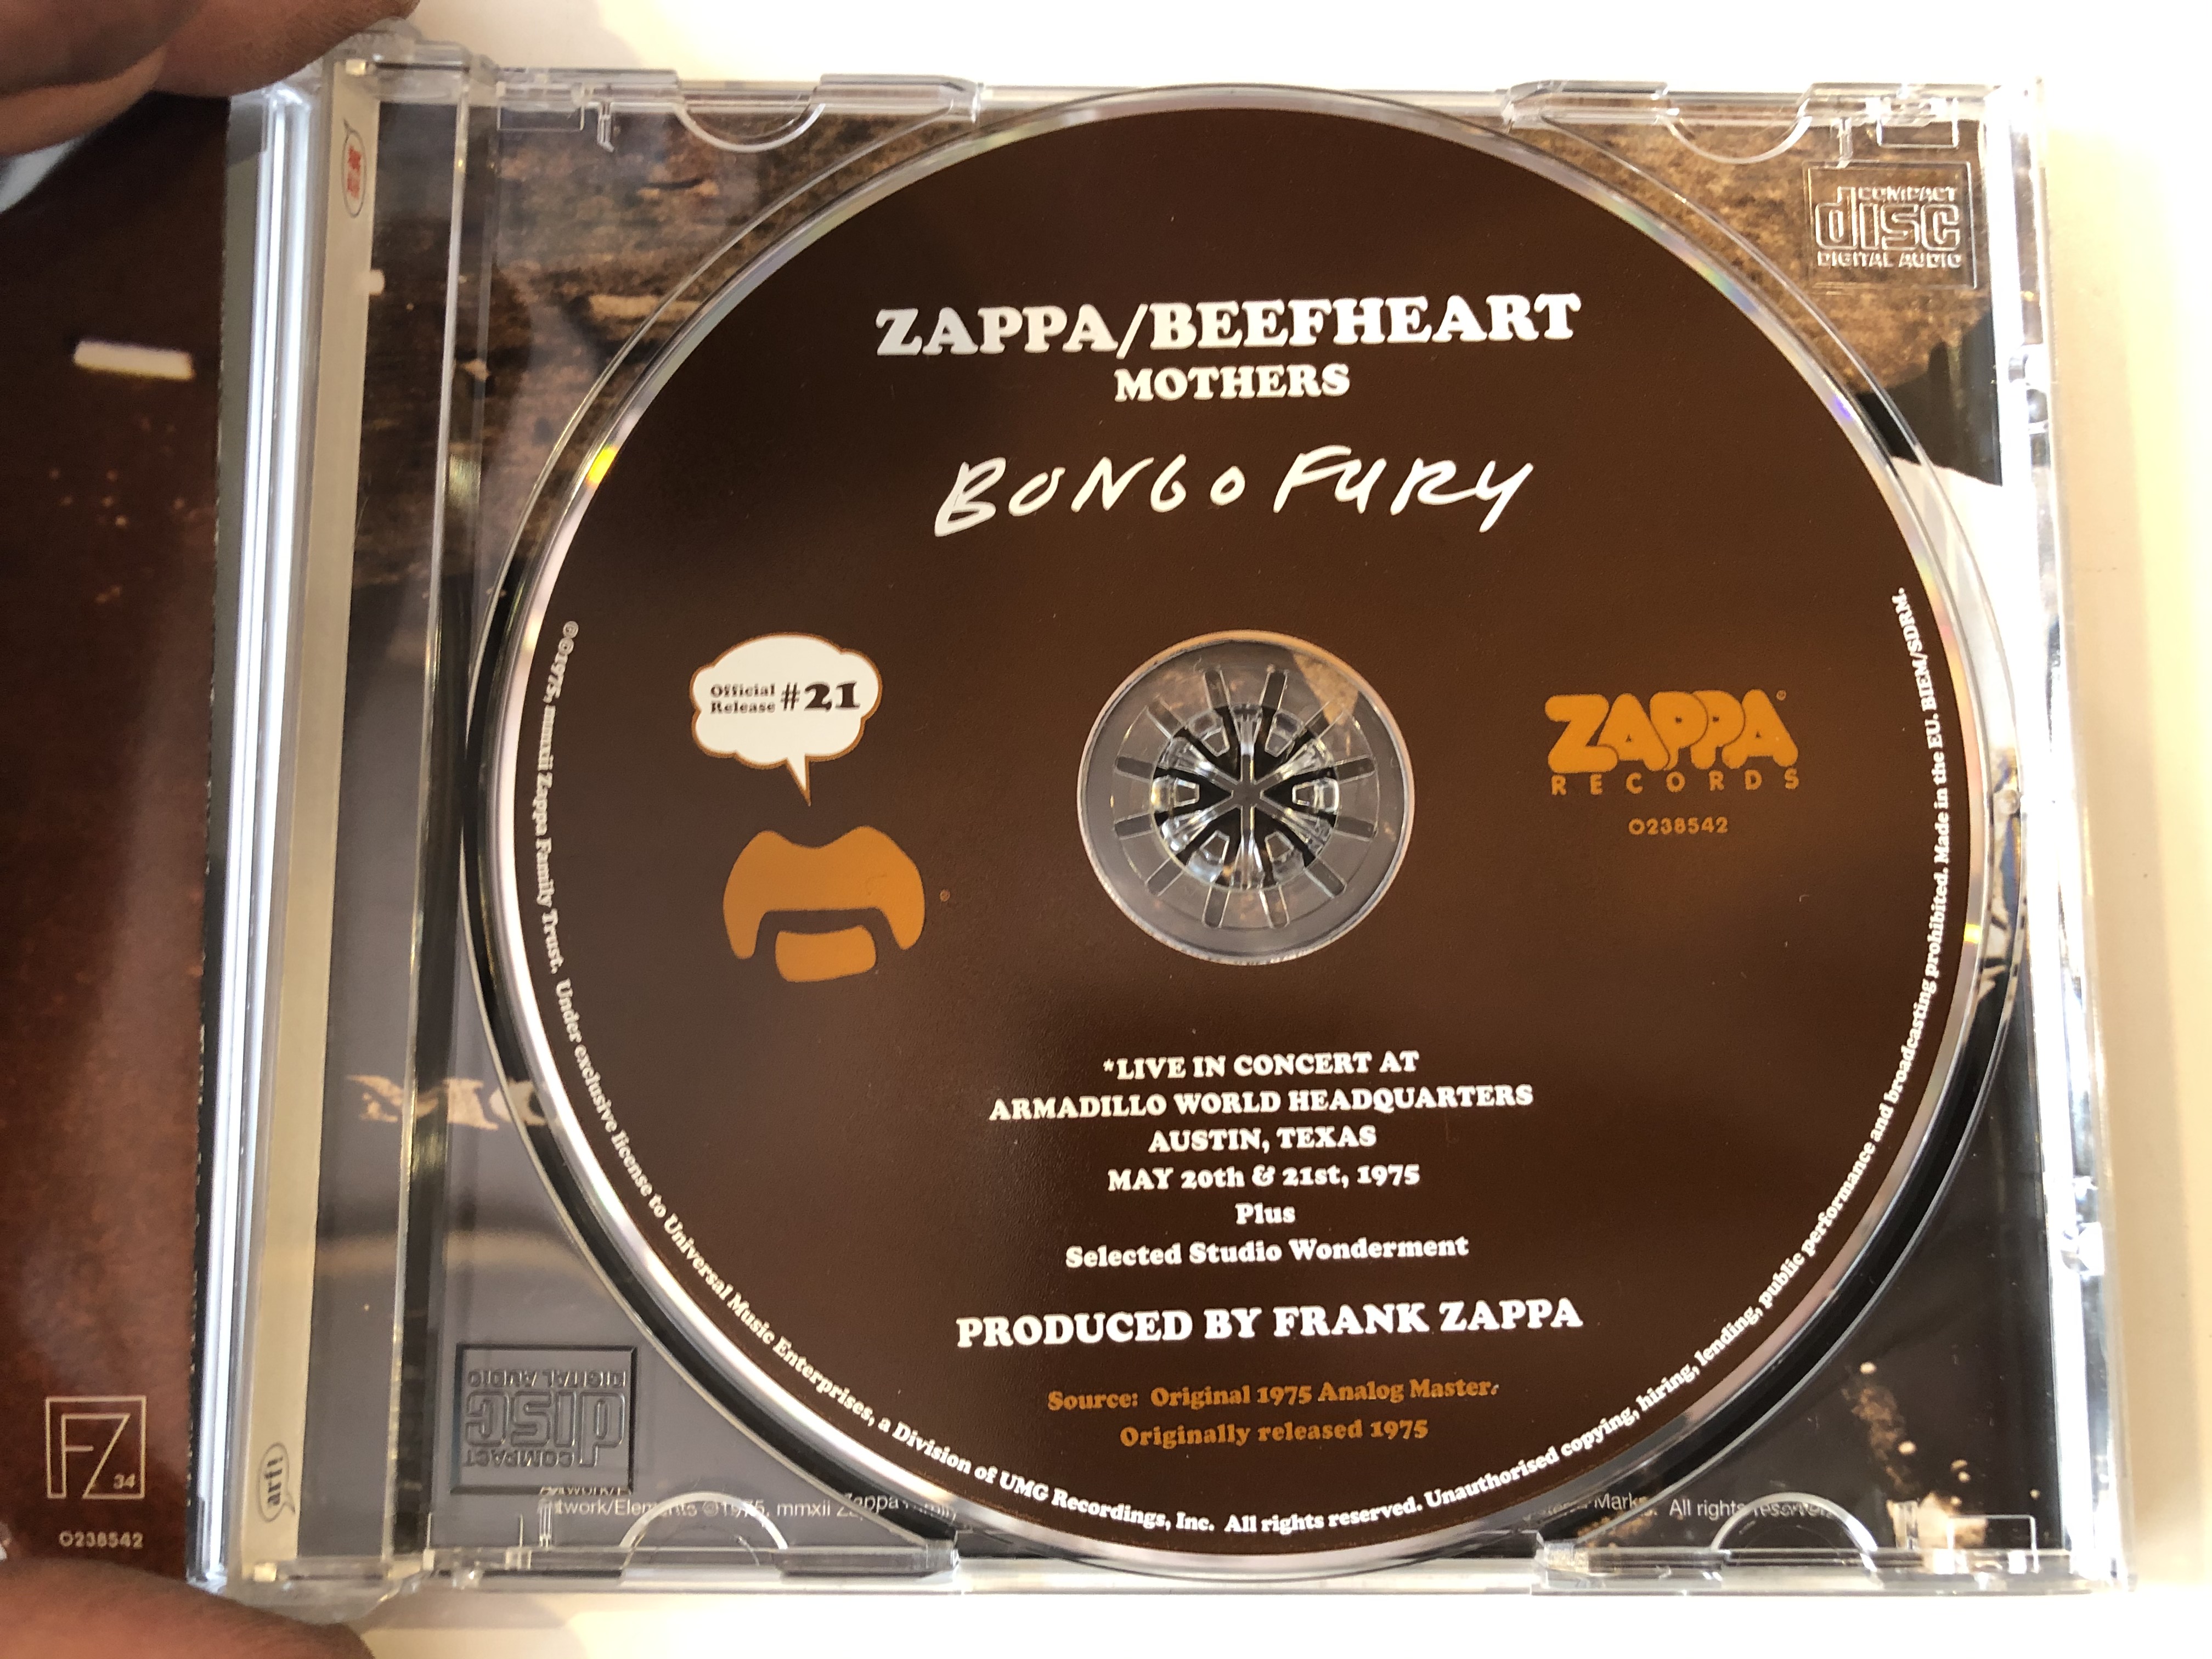 zappa-beefheart-mothers-bongo-fury-zappa-records-audio-cd-2012-0238542-2-.jpg